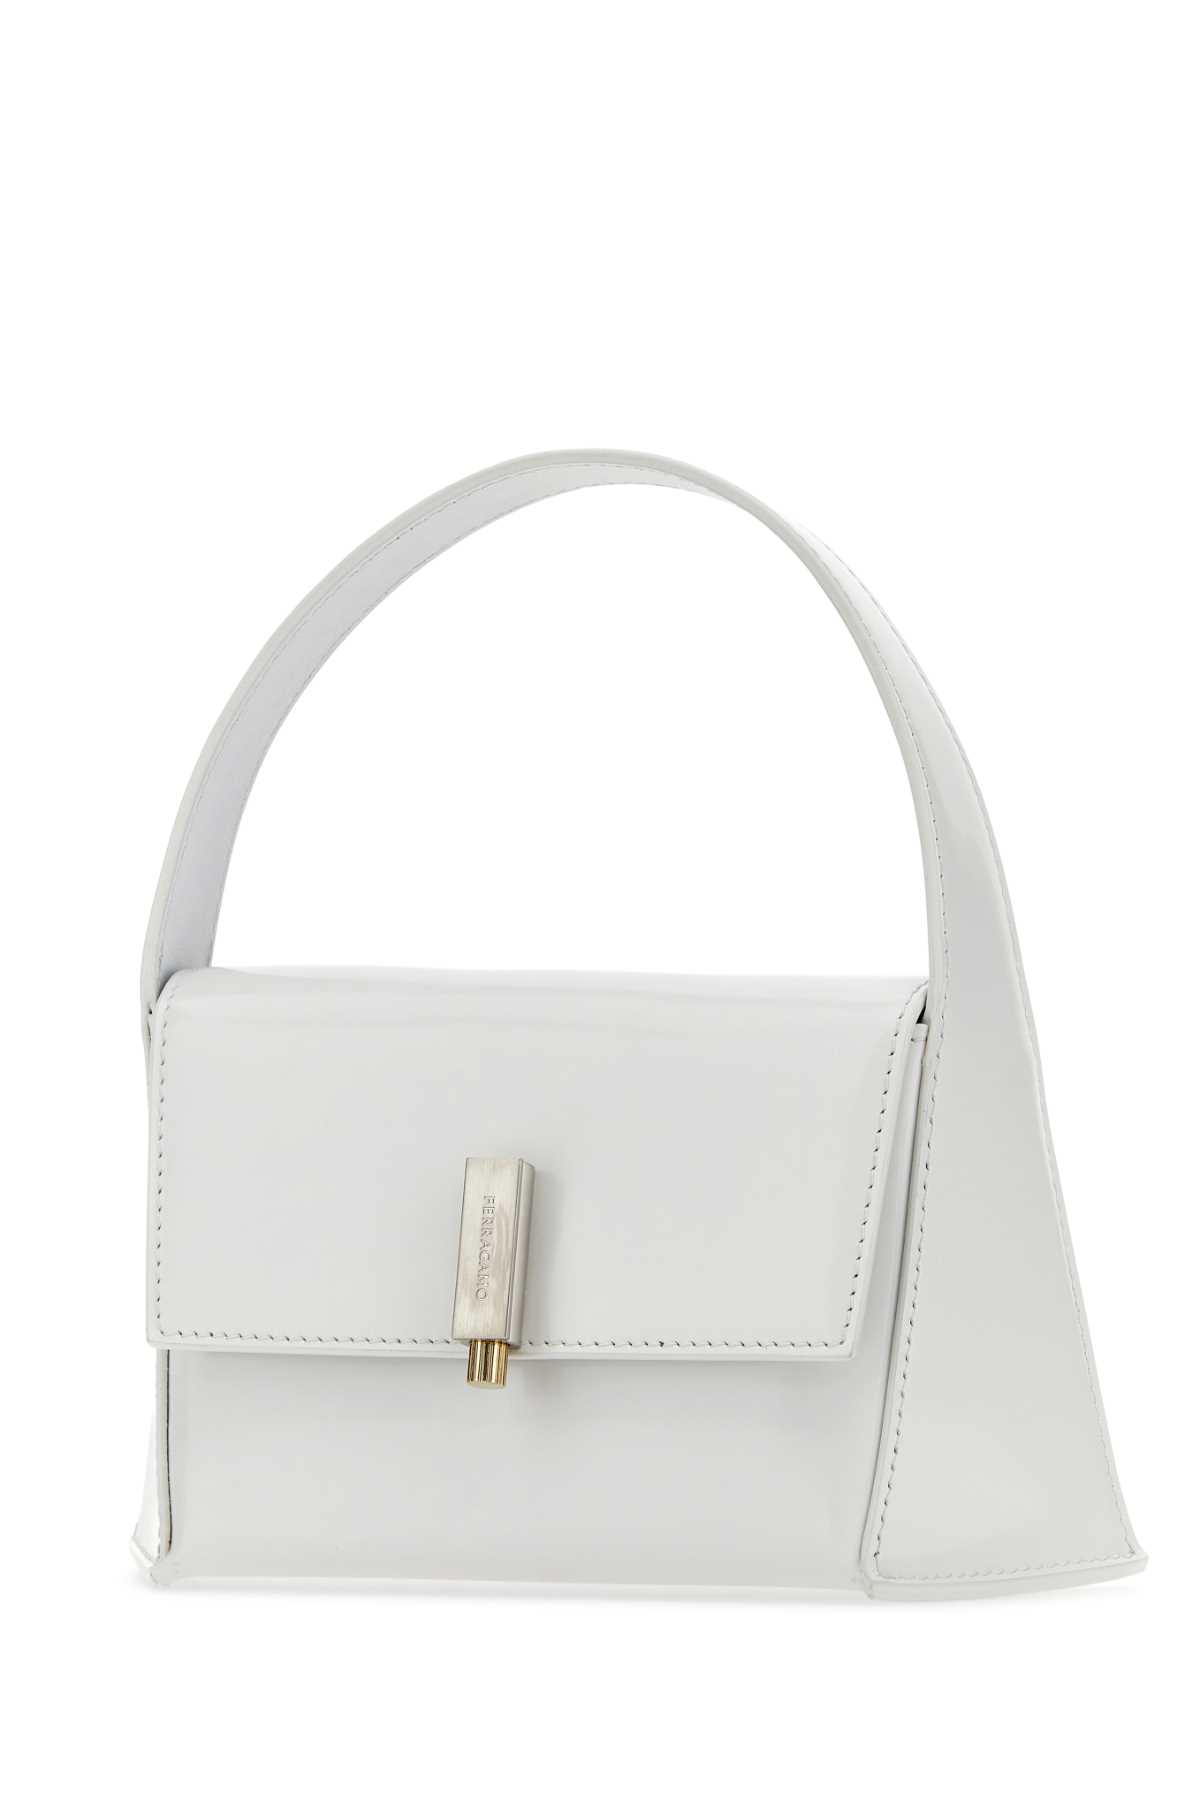 Shop Ferragamo White Leather Mini Prisma Handbag